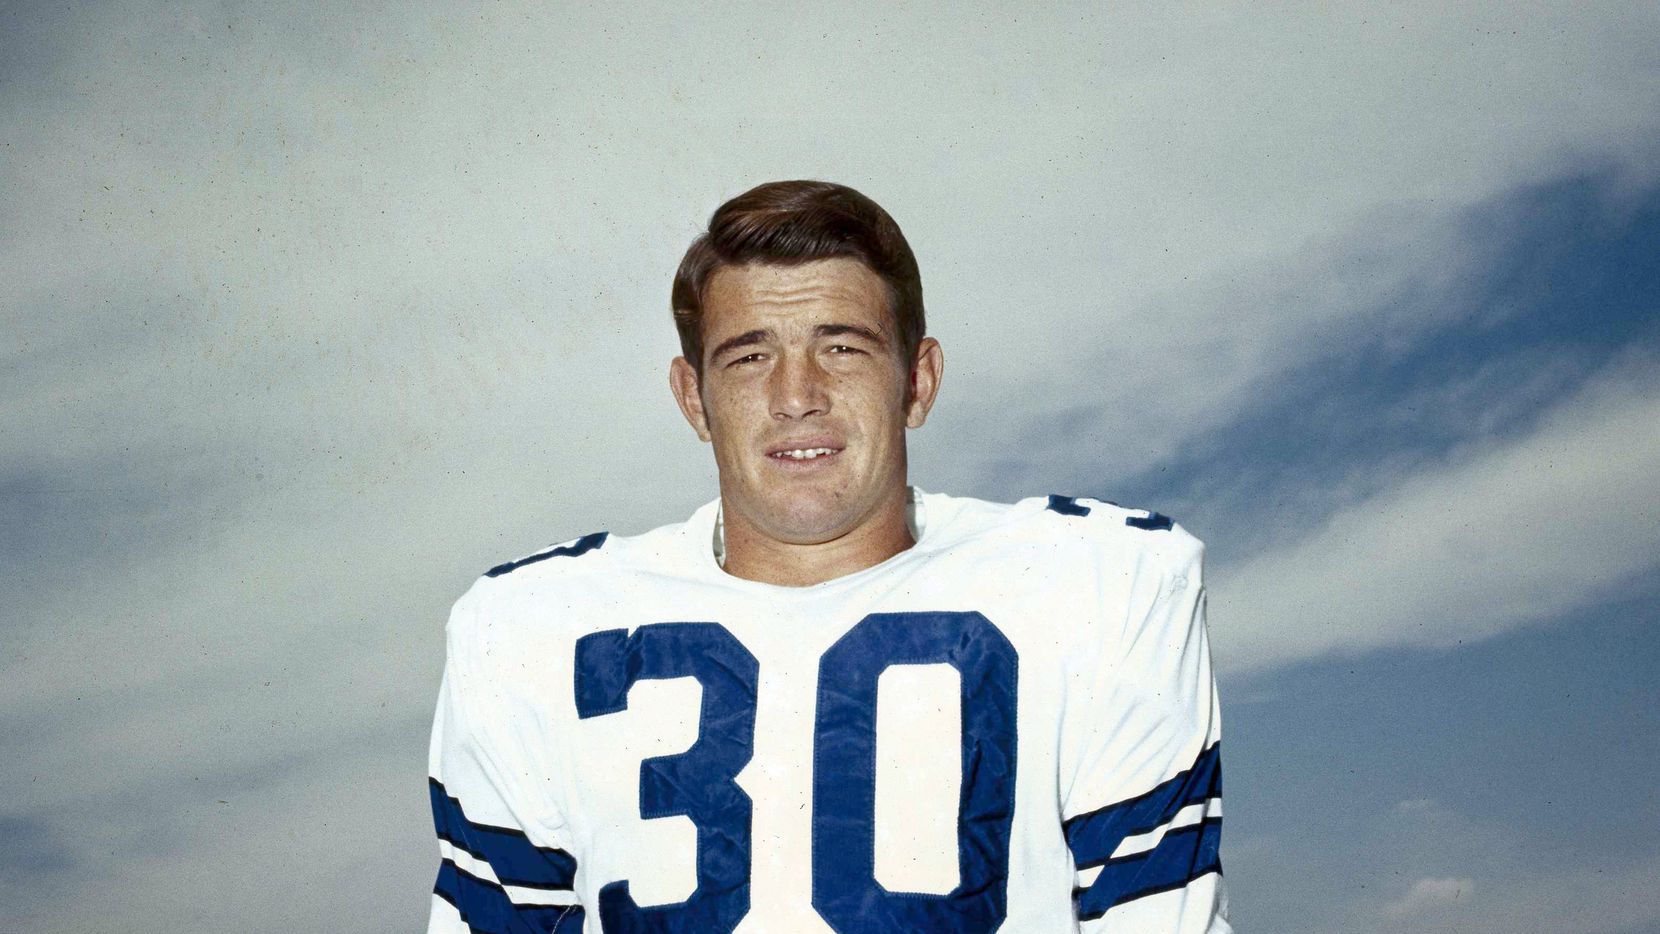 Honoring the Legacy of Former Dallas Cowboys Player Dan Reeves